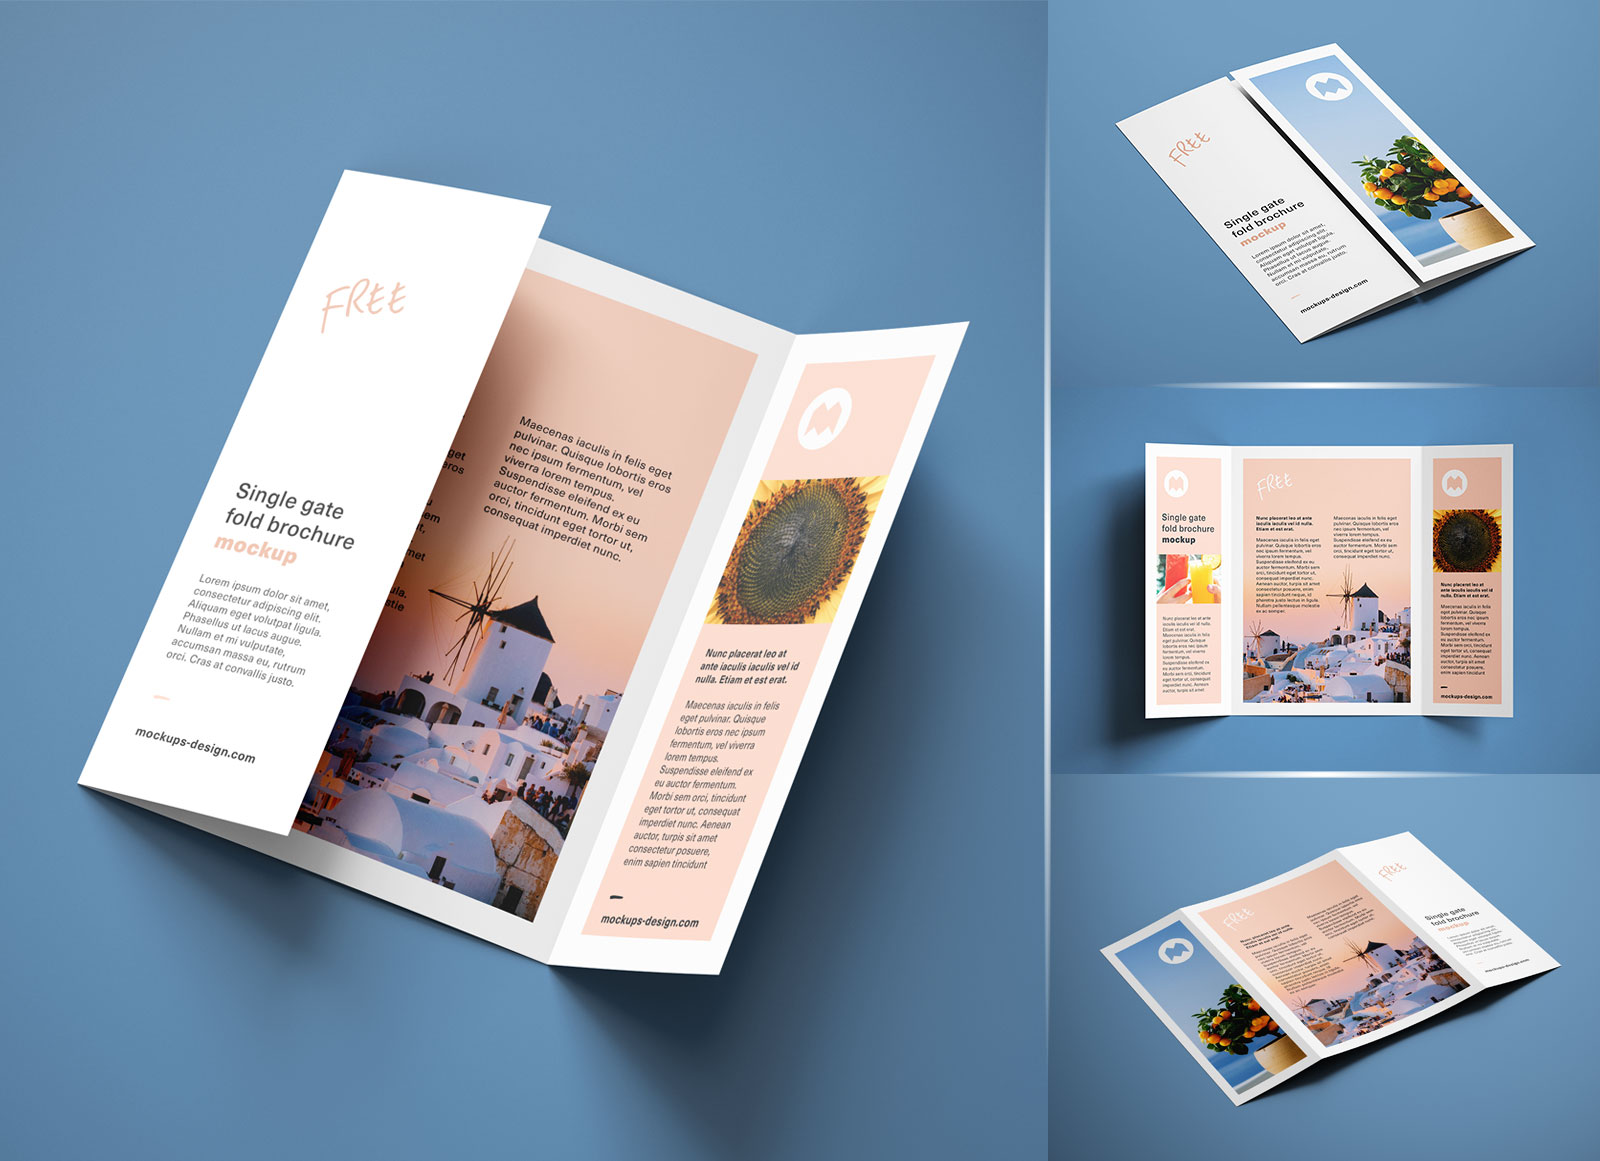 Free A20 Single-Gate Fold Brochure Mockup PSD Set - Good Mockups In Gate Fold Brochure Template